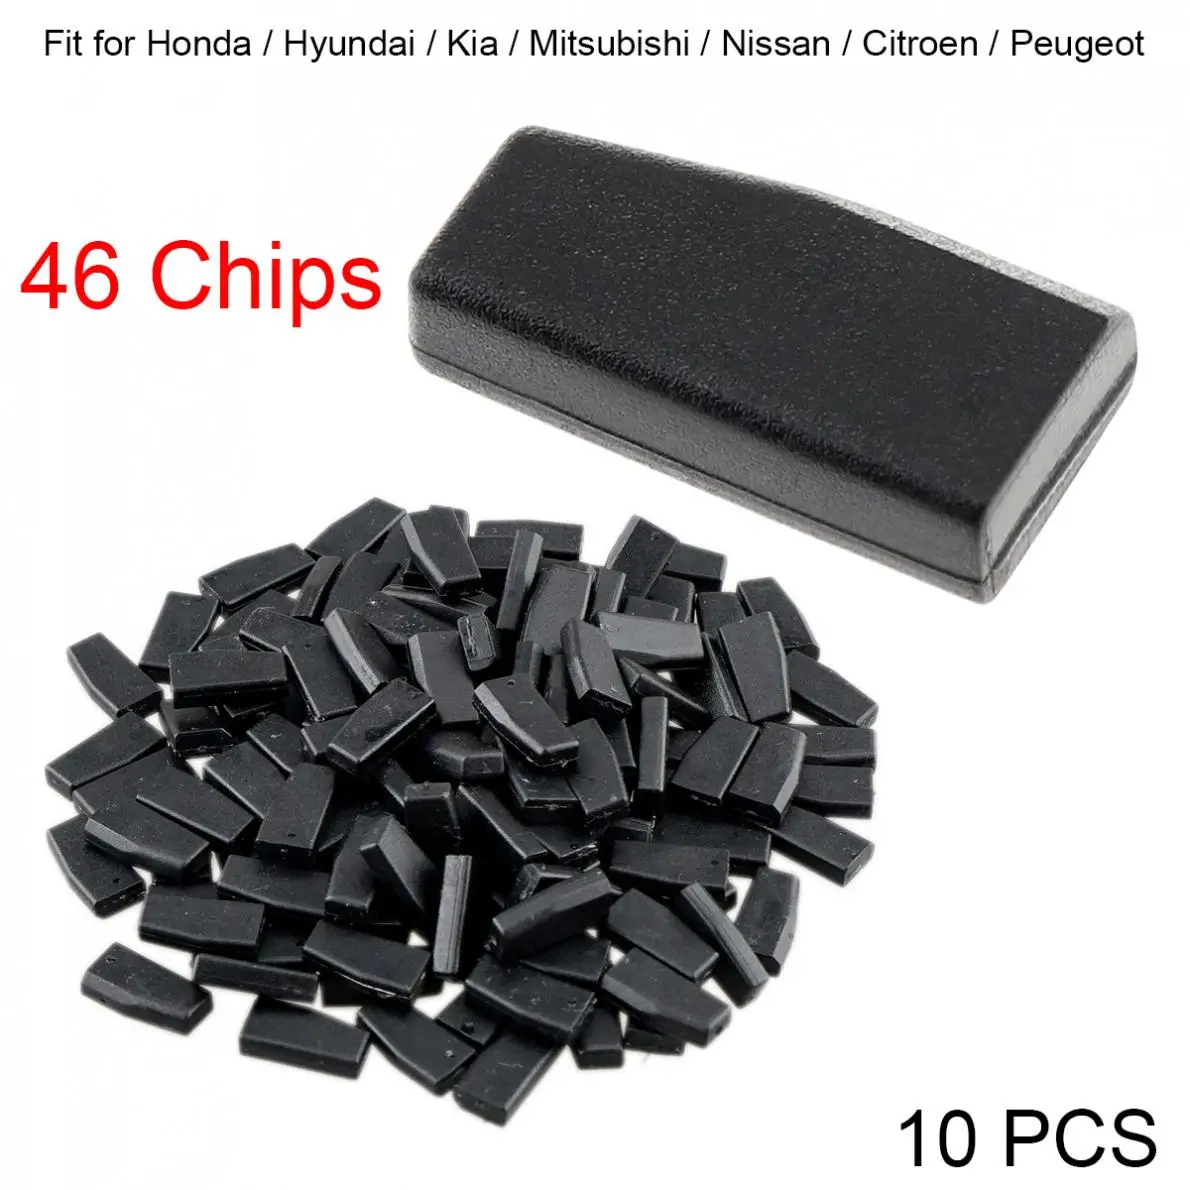 

10pcs Blank ID46 PCF7936 Carbon Chip Car Key Transponder Chips Fit for Honda Hyundai Kia Mitsubishi Nissan Citroen Peugeot